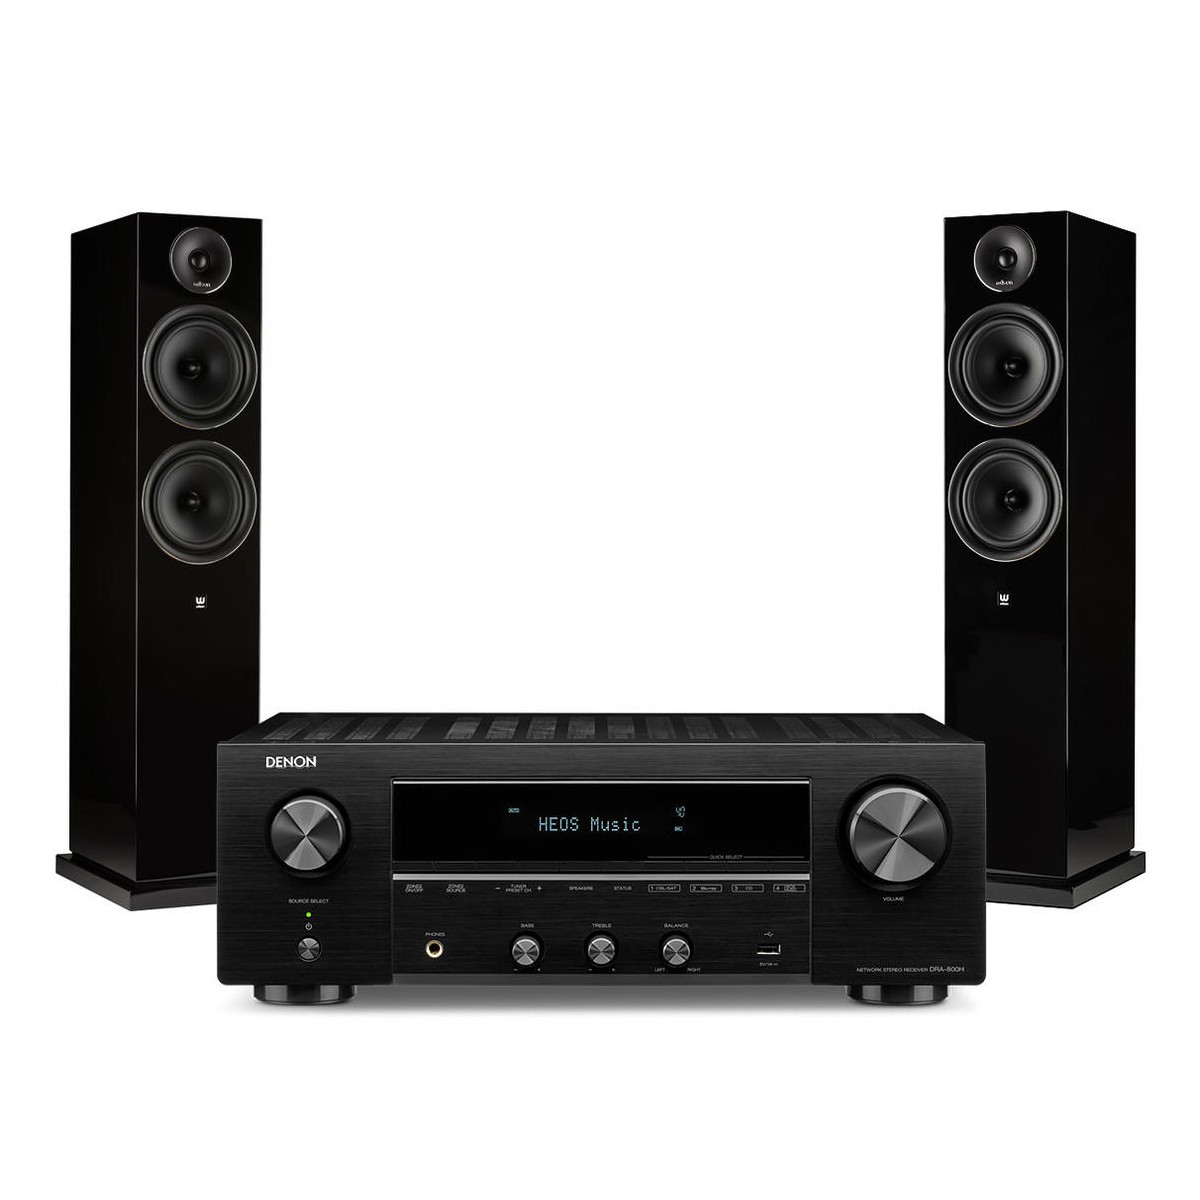 Zestaw stereo: DRA-800H + EL-8